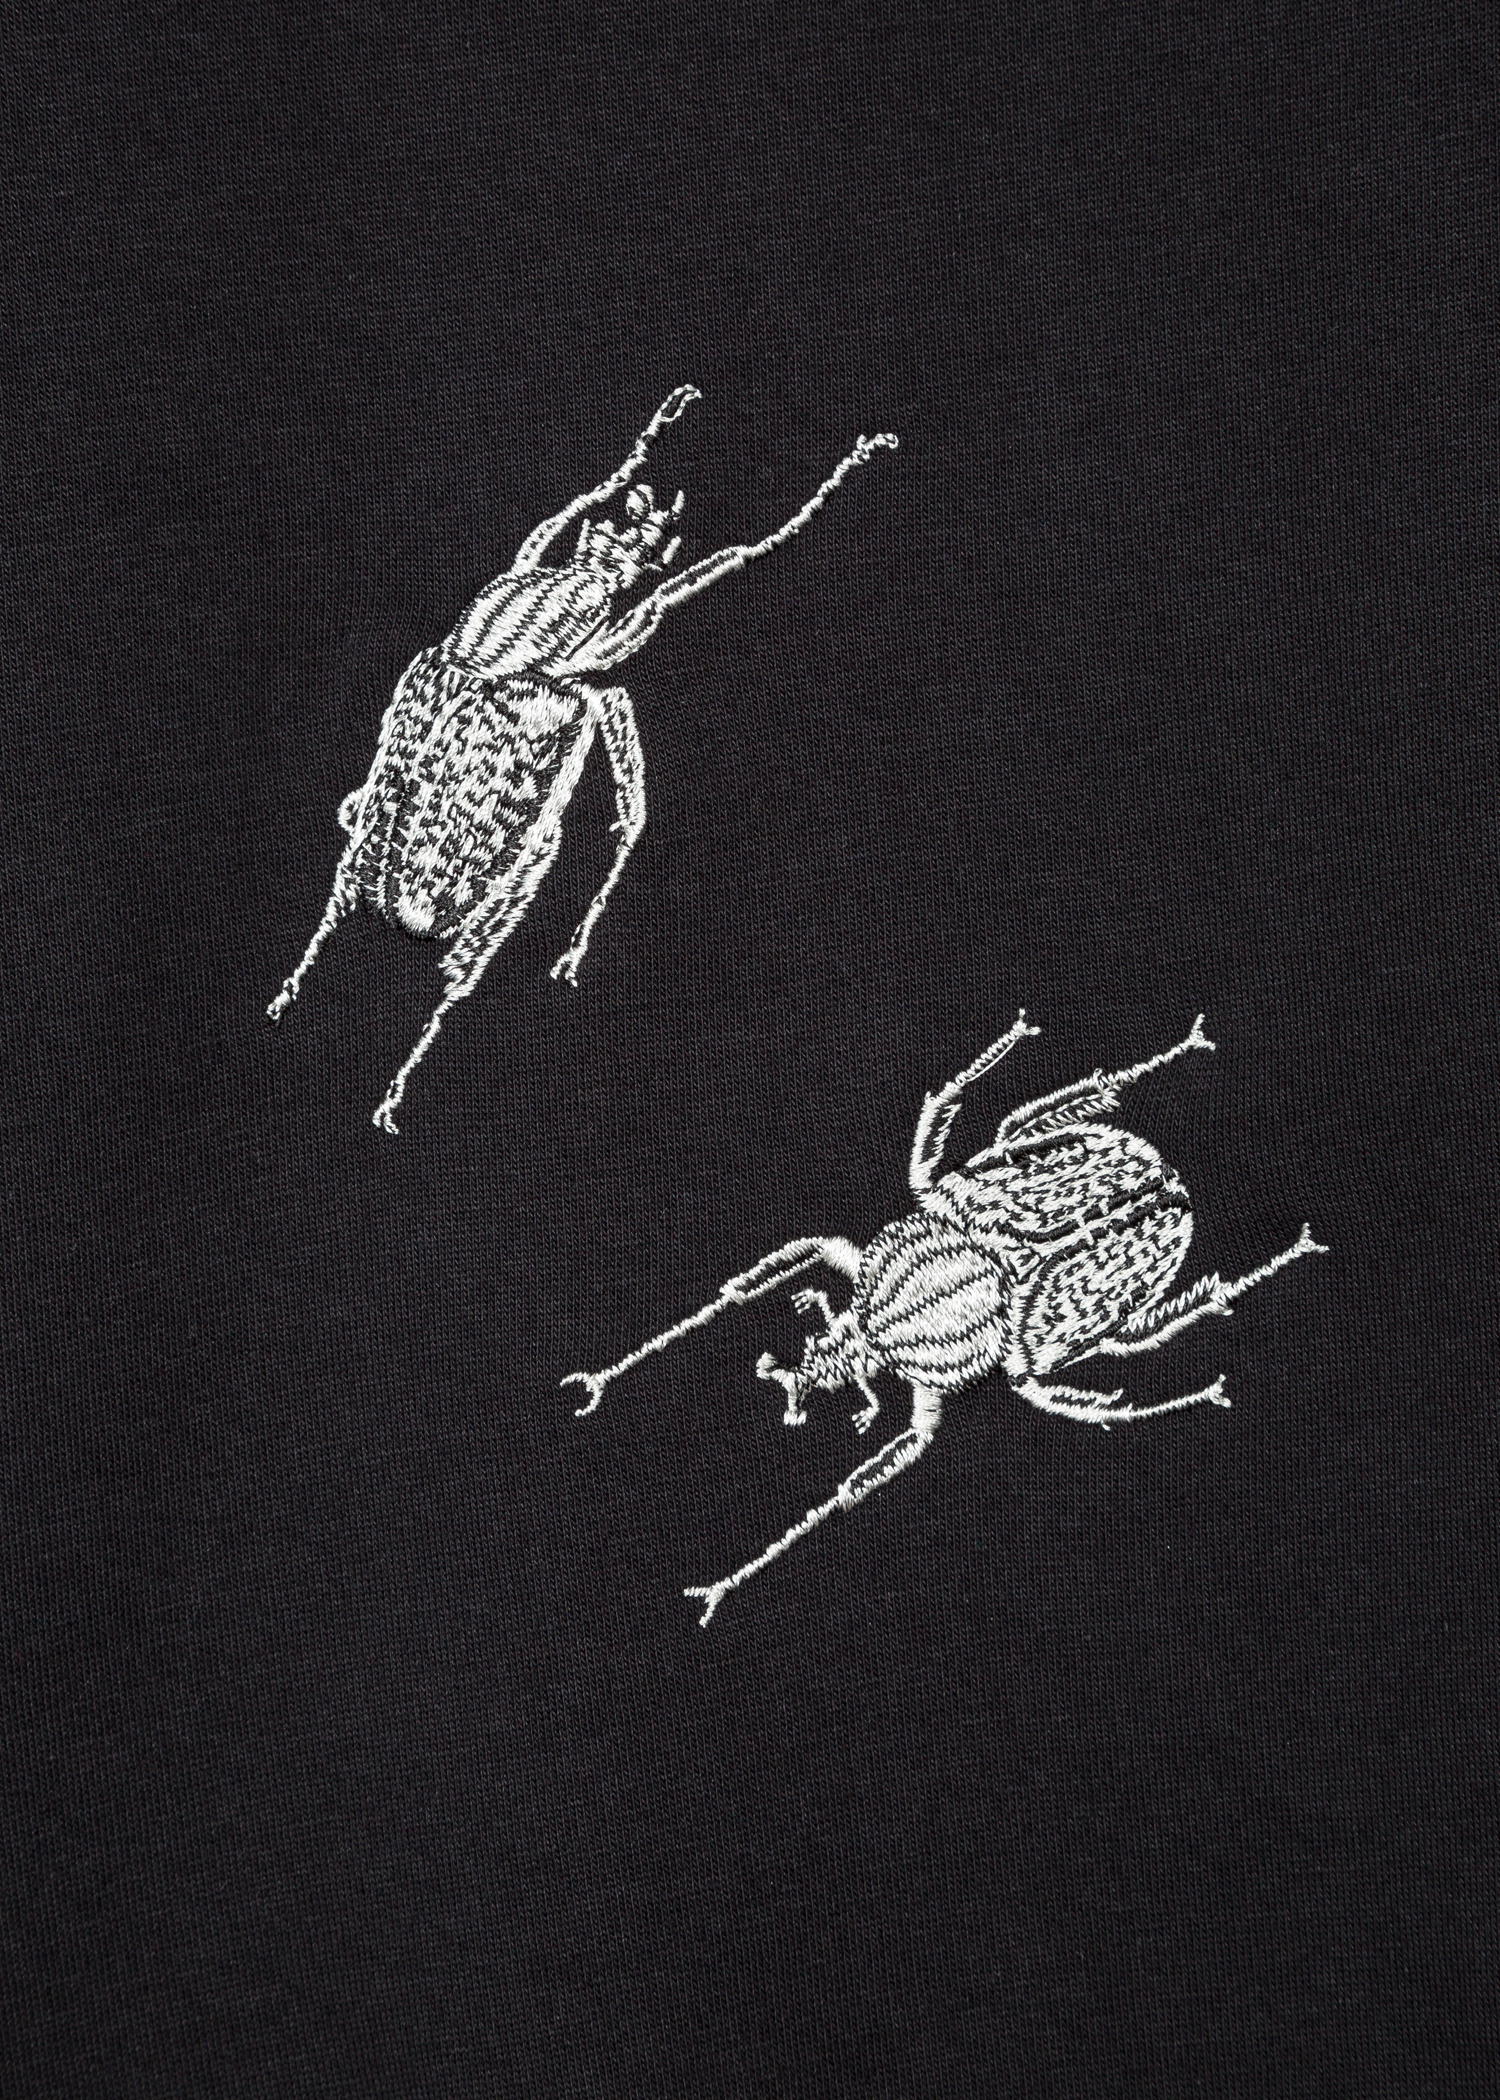 Details view - Men's Black Embroidered 'Beetle' Sweatshirt Paul Smith